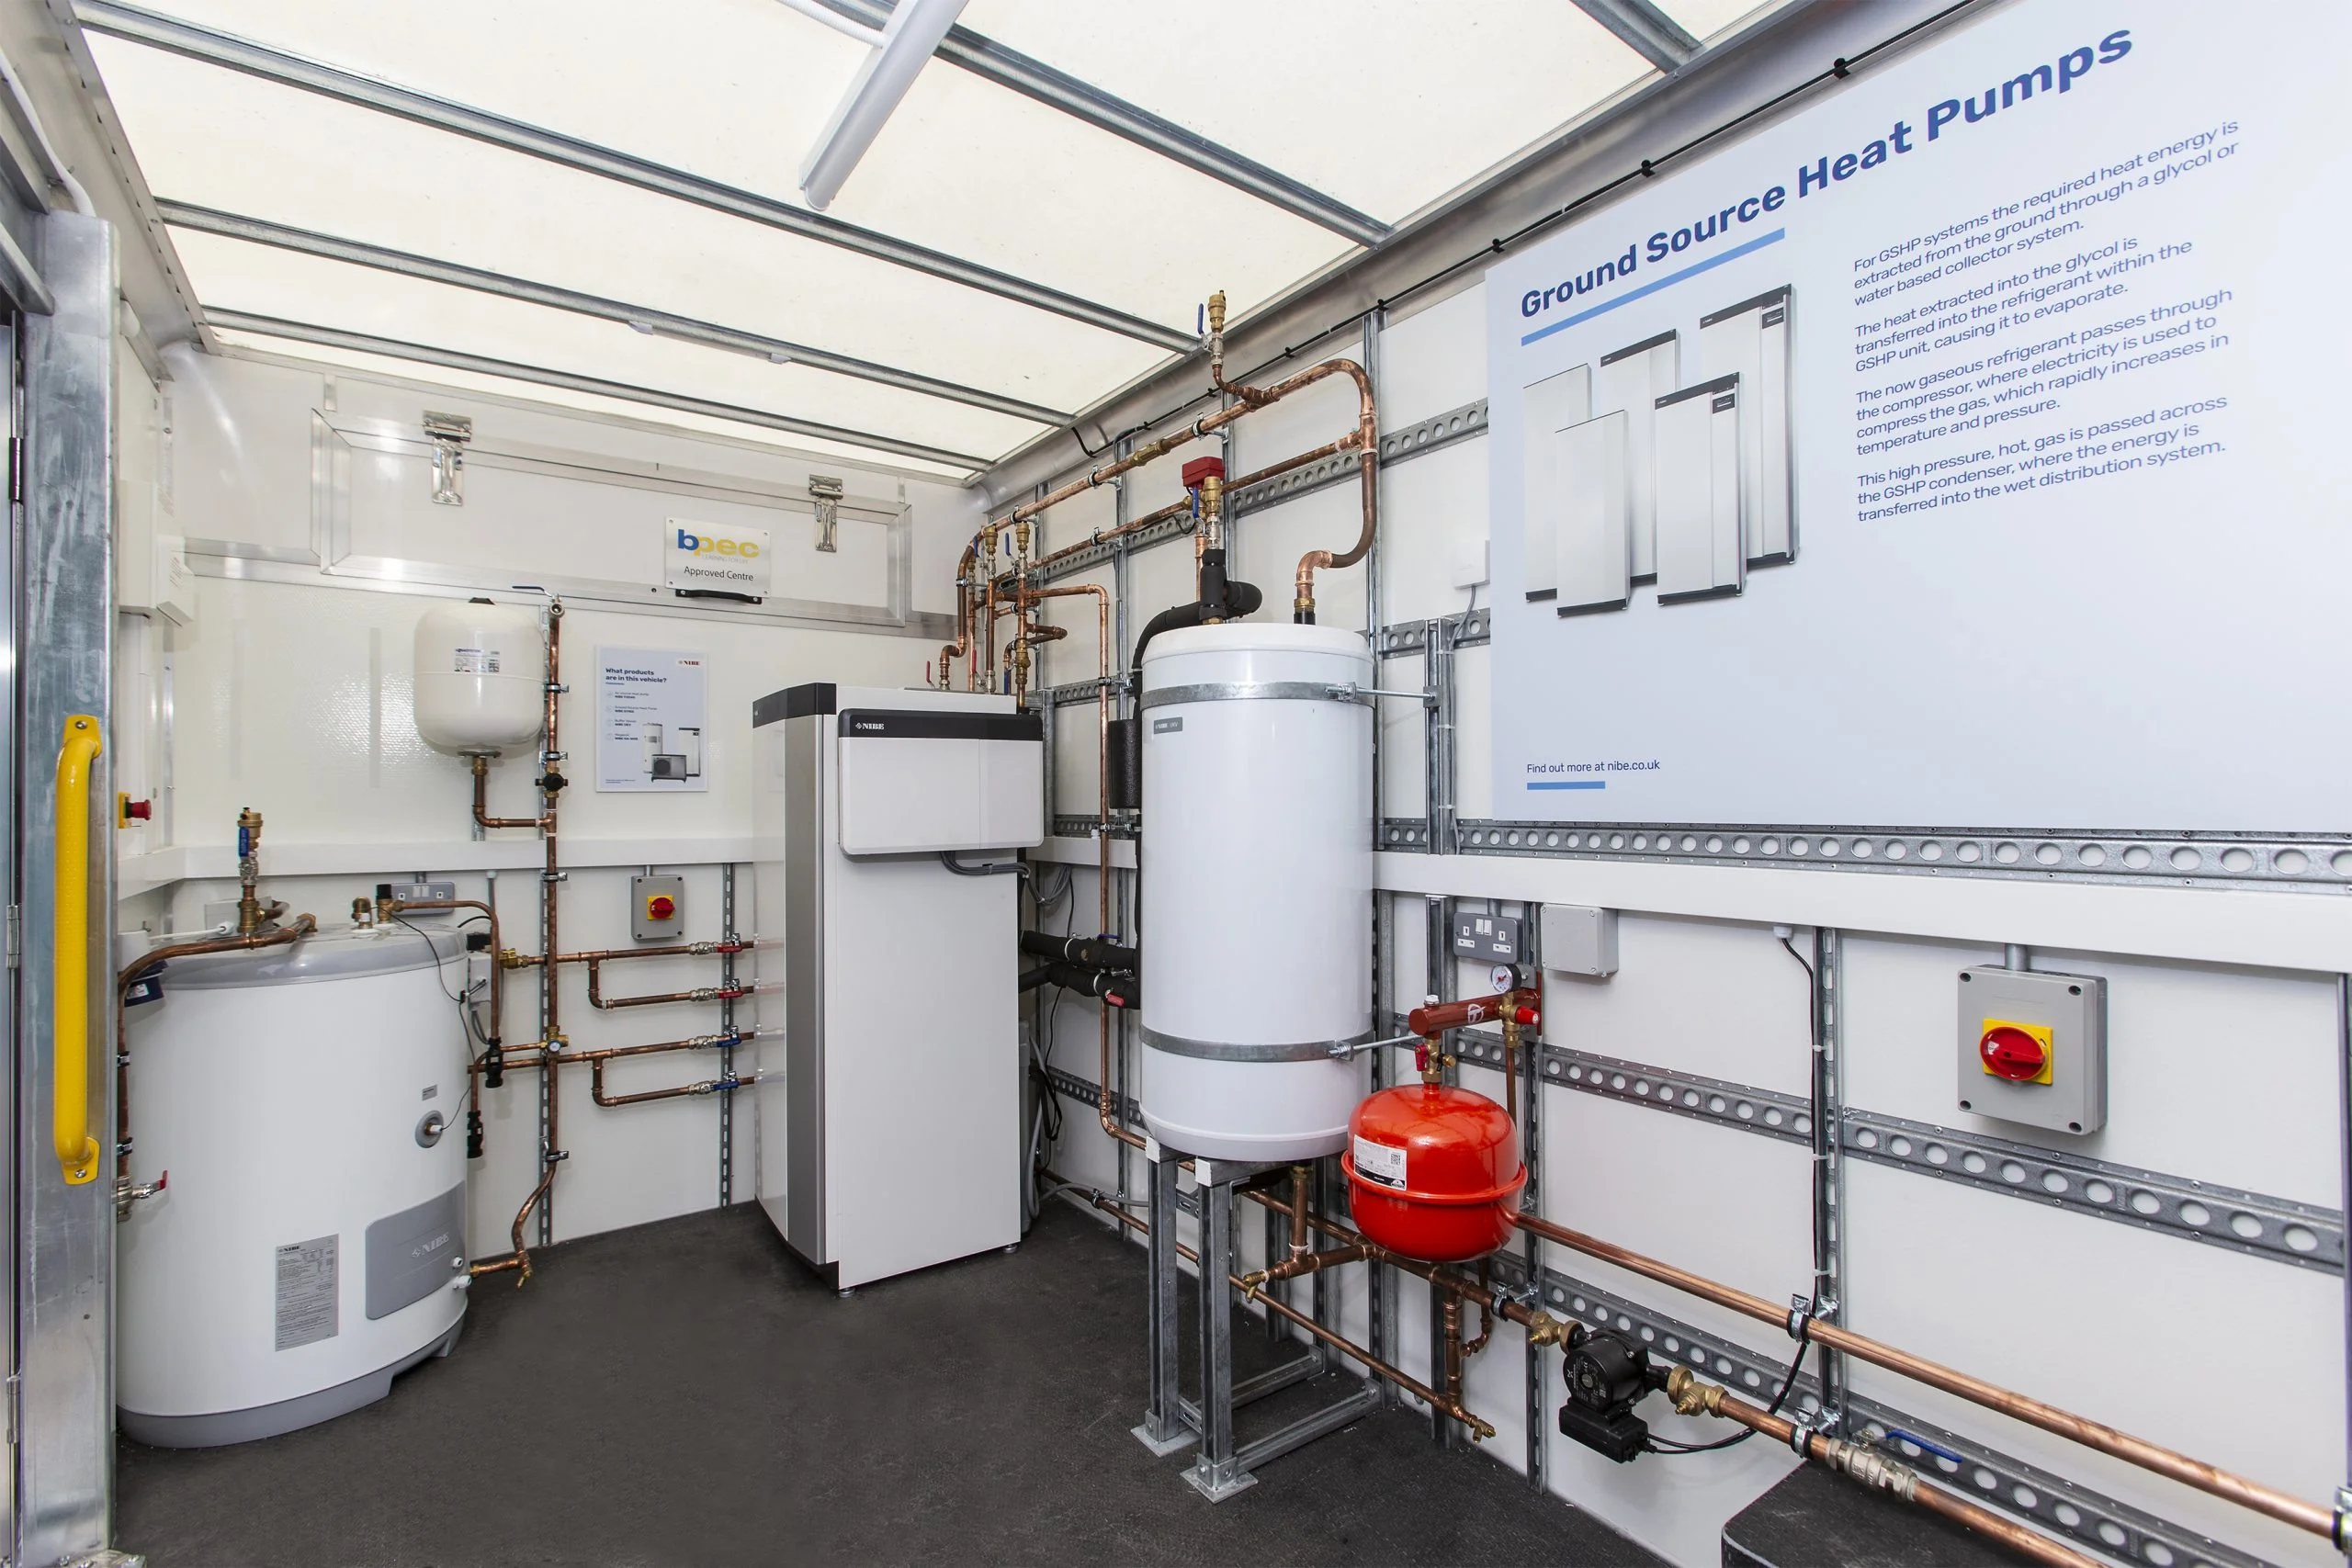 Mobile heat pump training centre - Energy Saving Trust